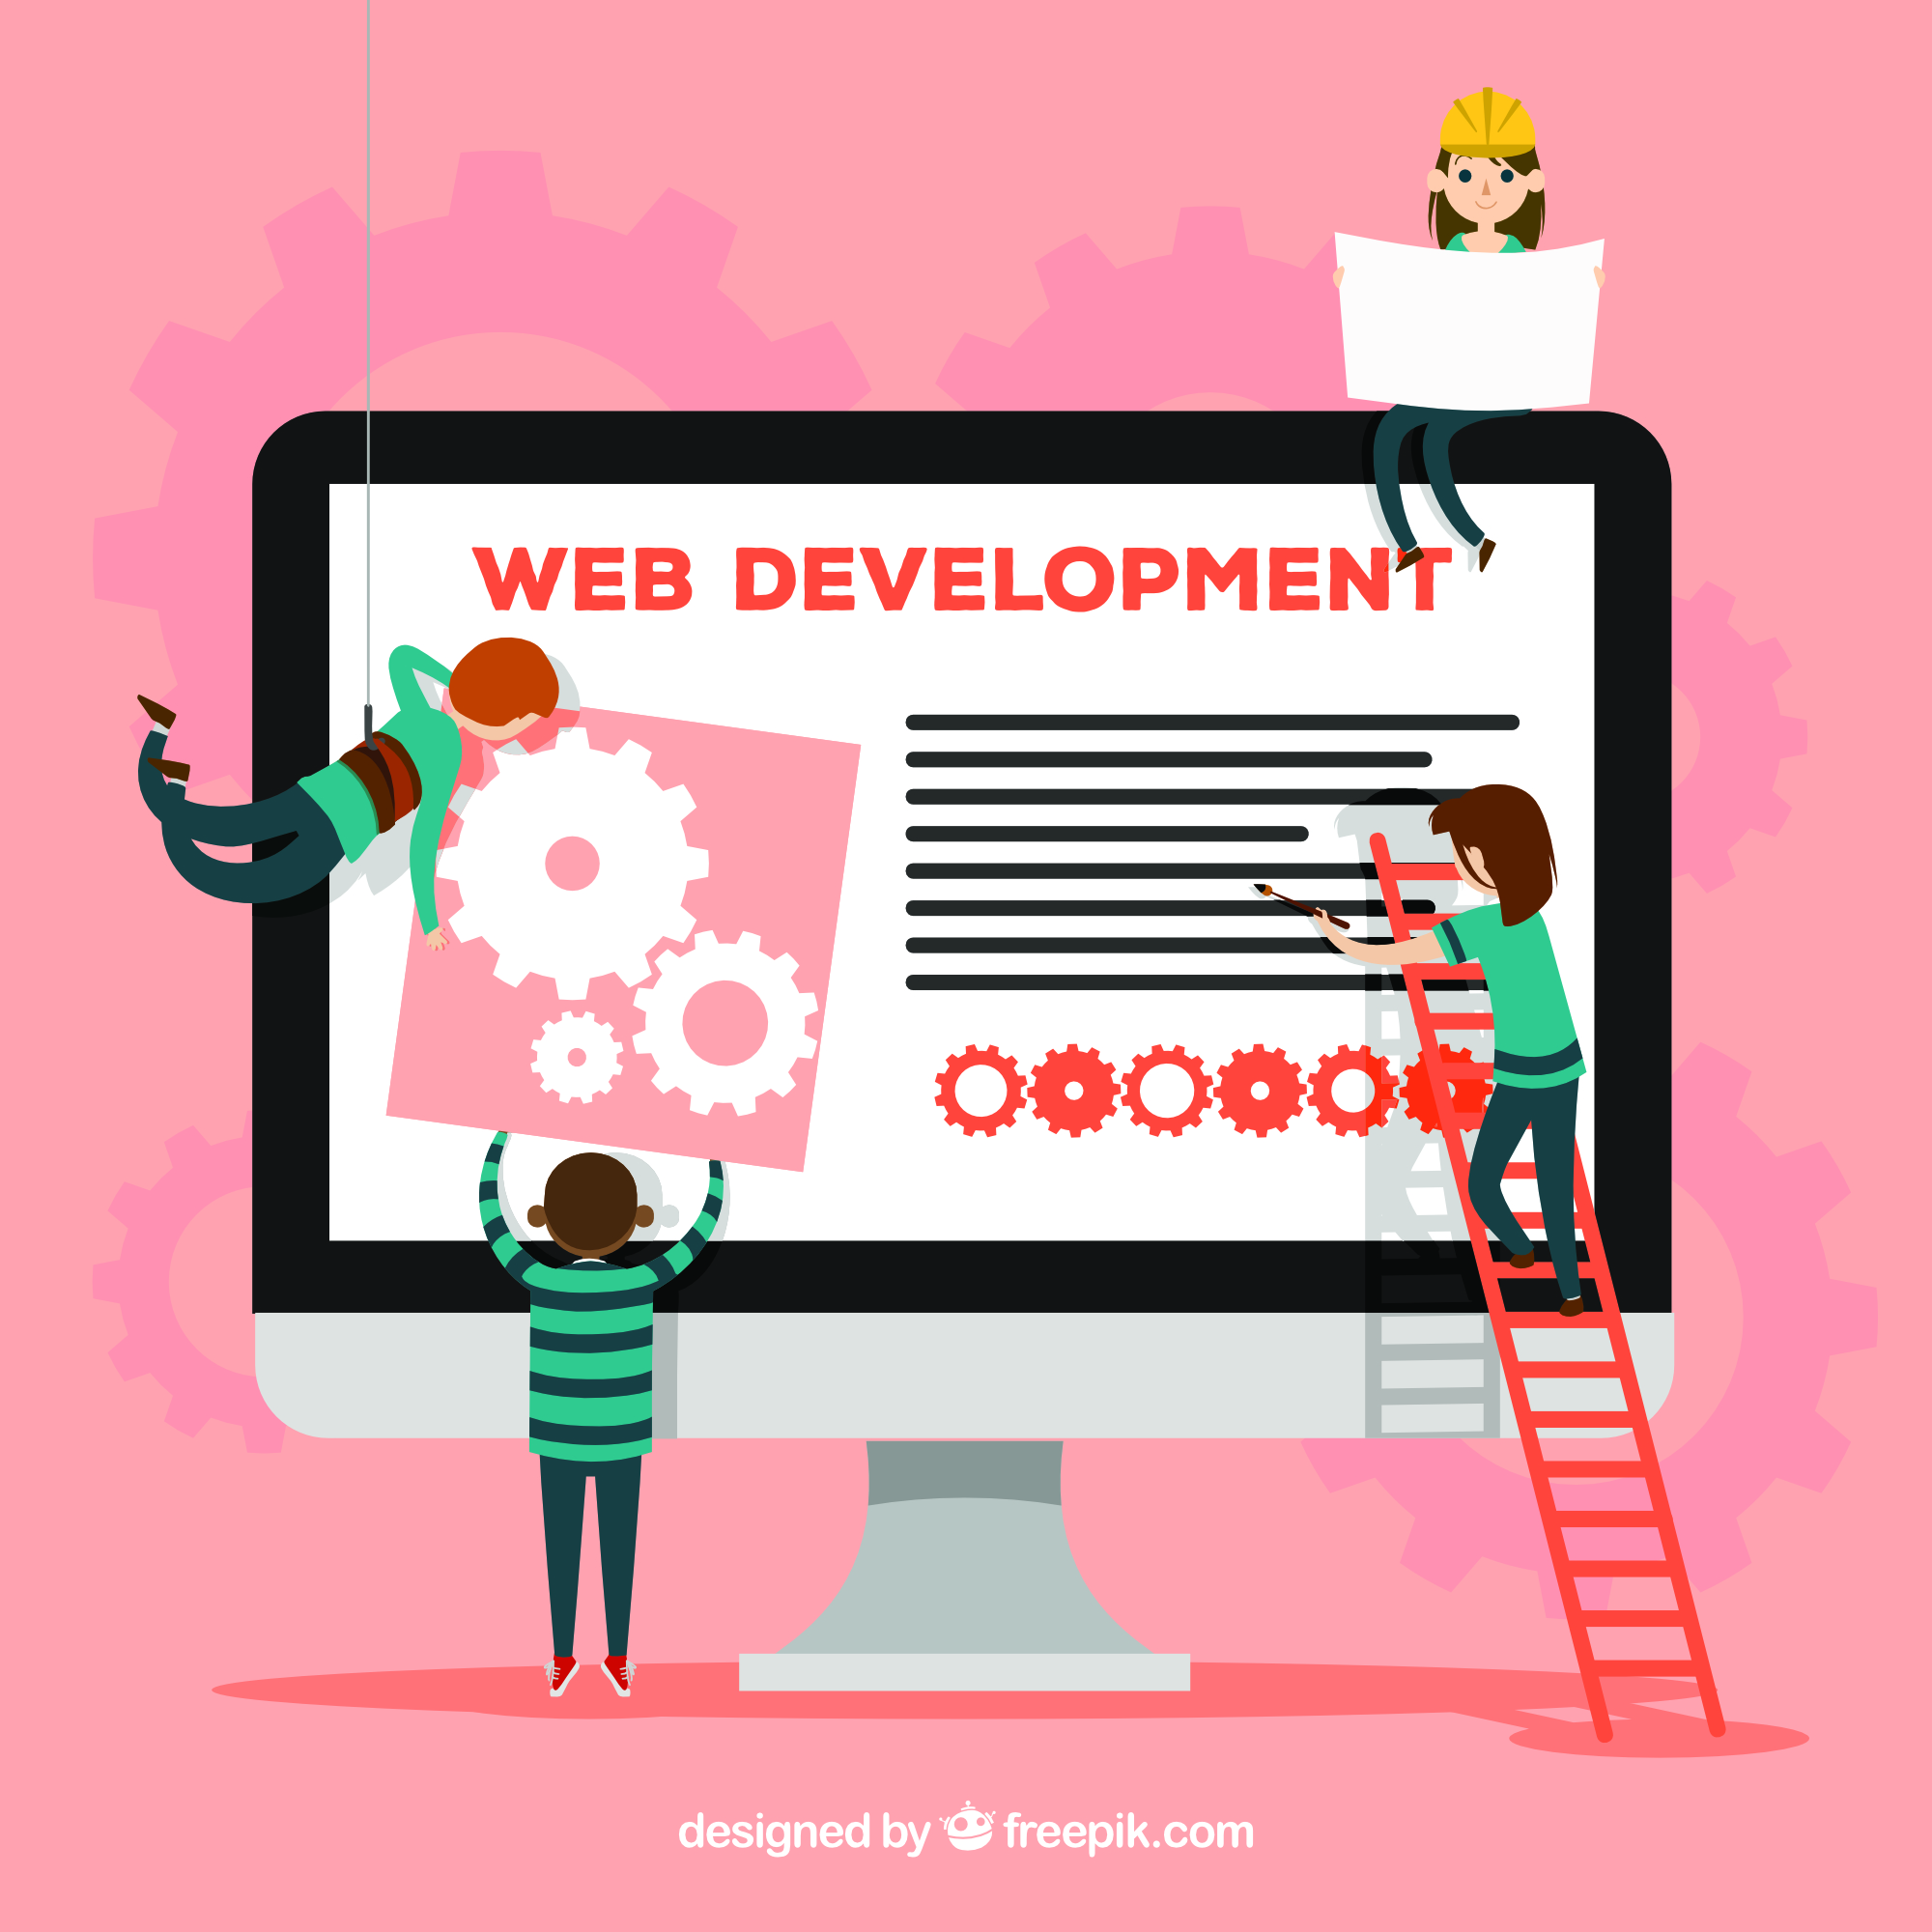 why do you need a website development company